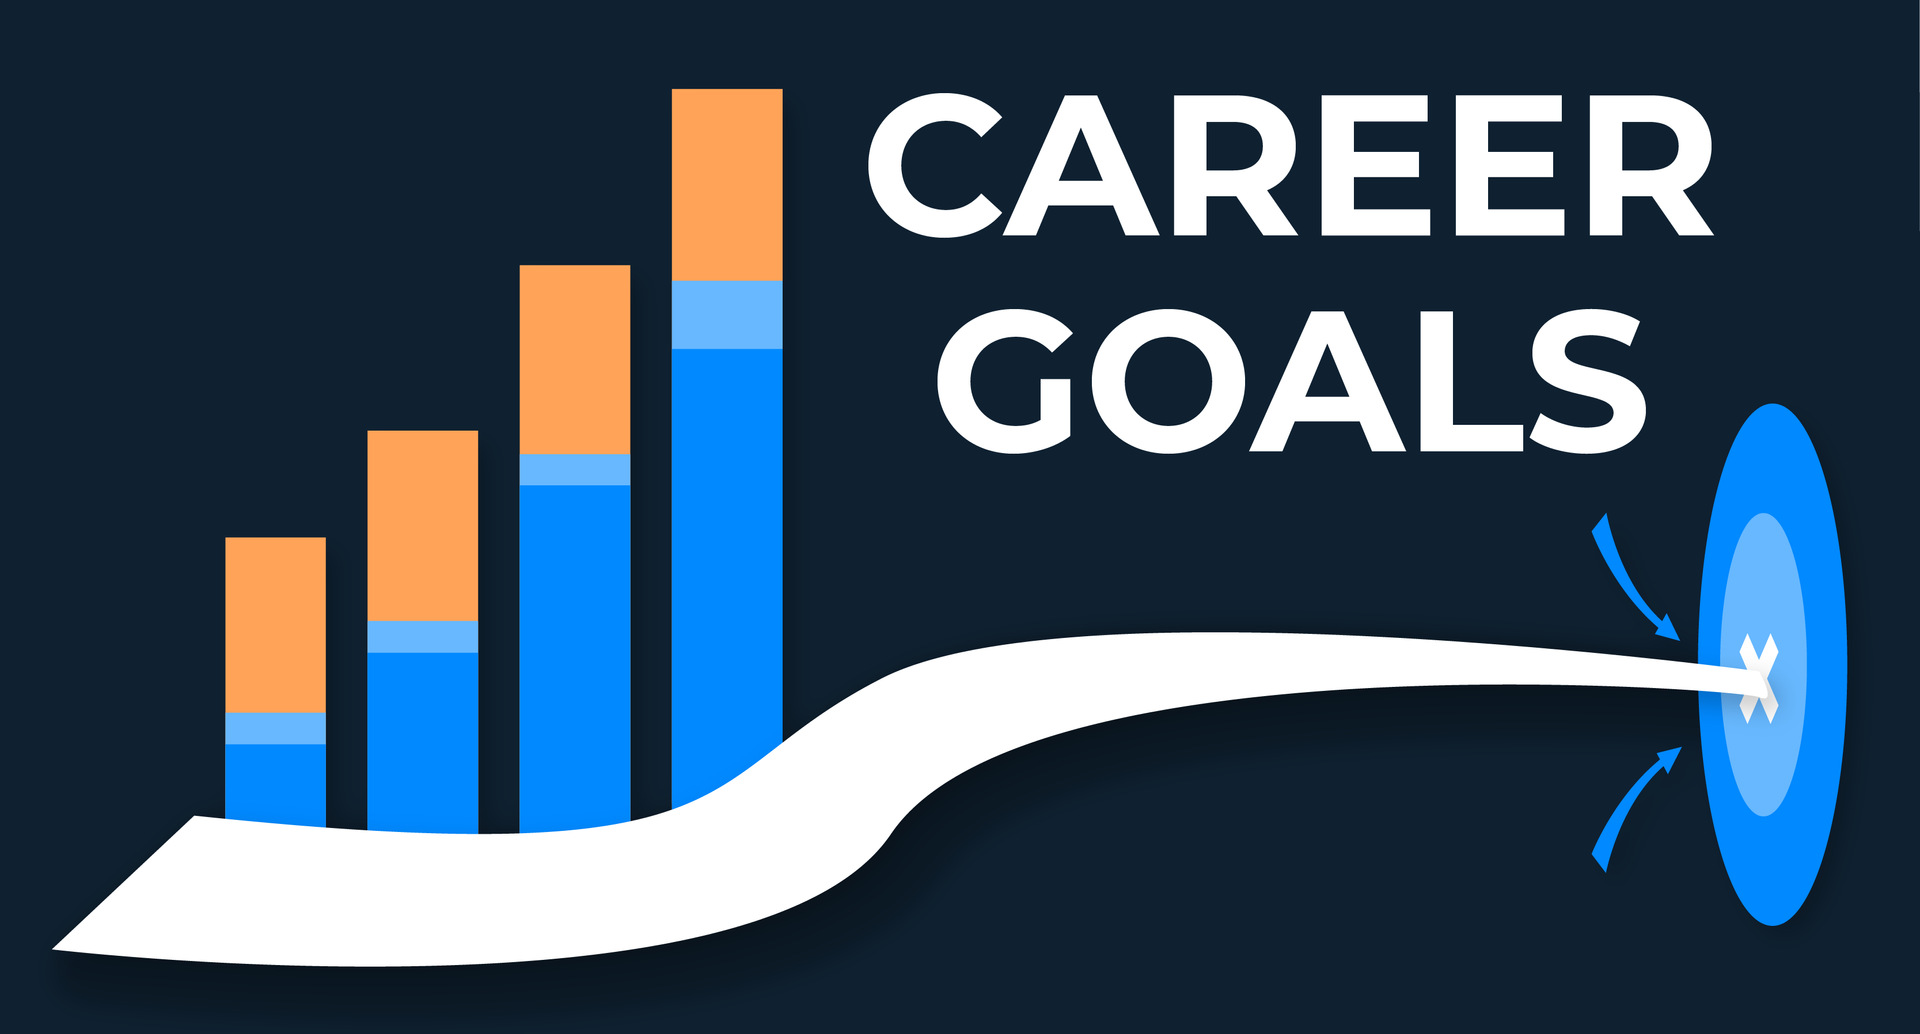 Scientific illustration and data visualization career goals icon